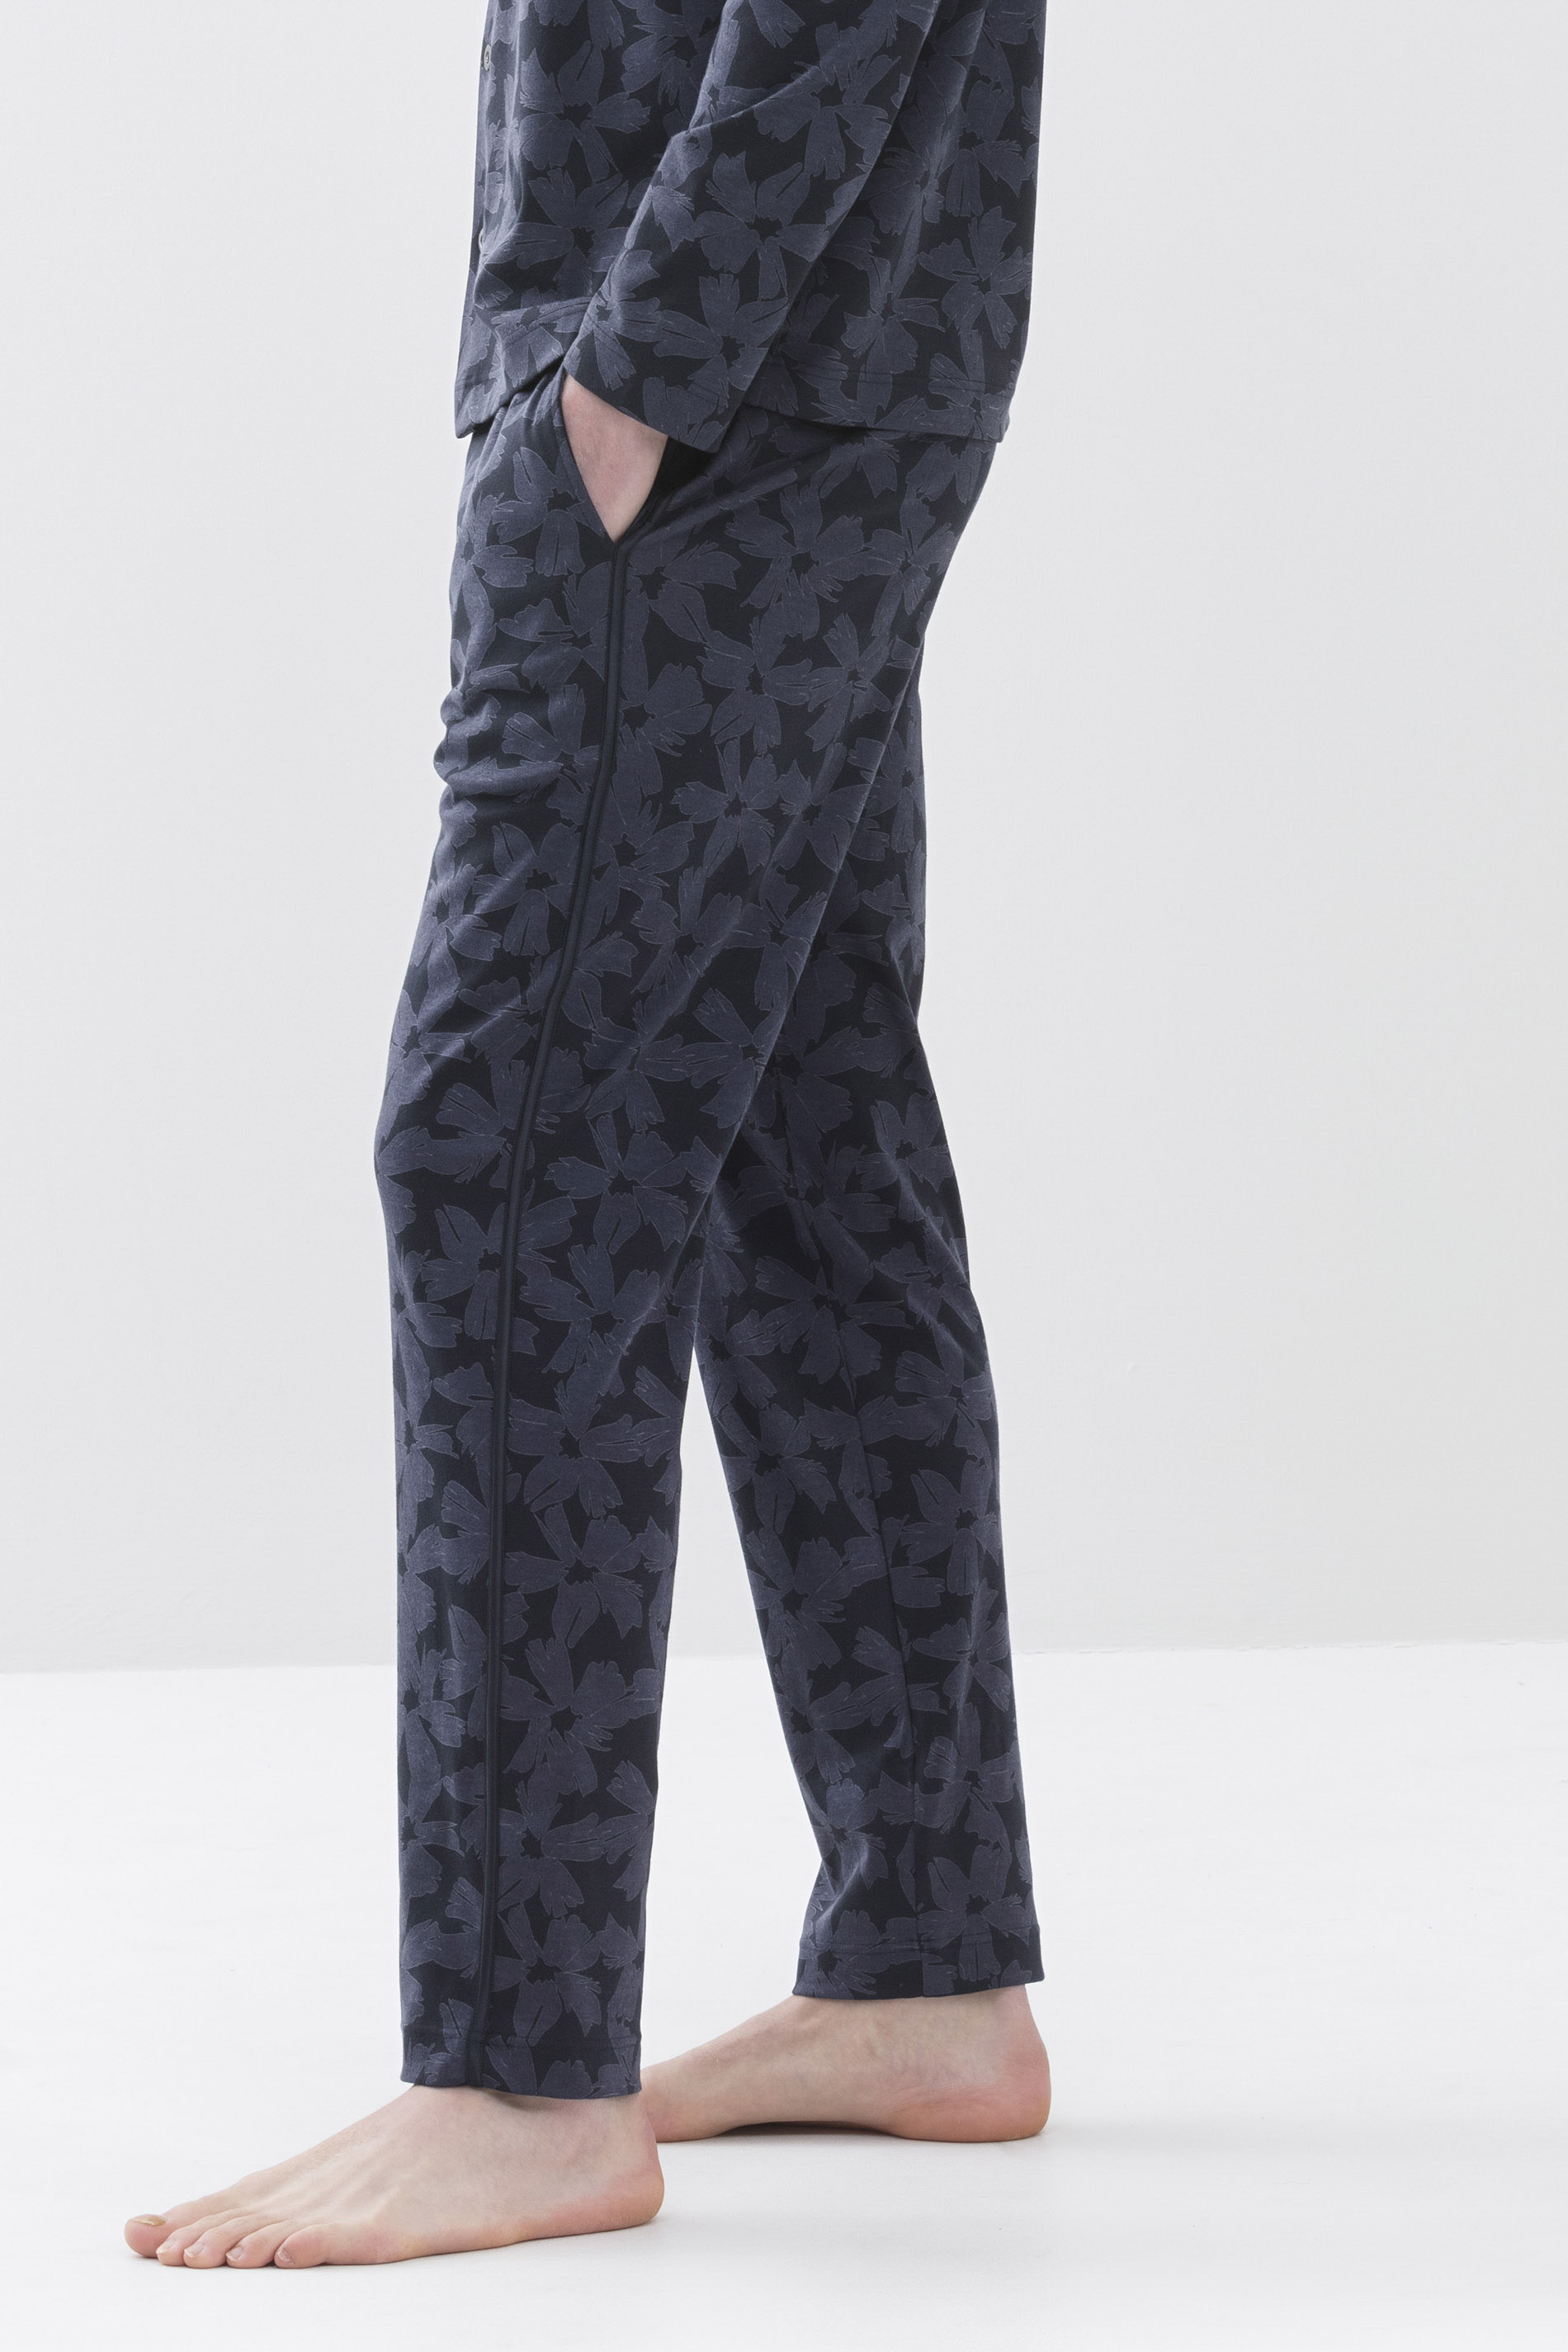 Long pyjama bottoms Indigo Serie Big Flowers Detail View 02 | mey®